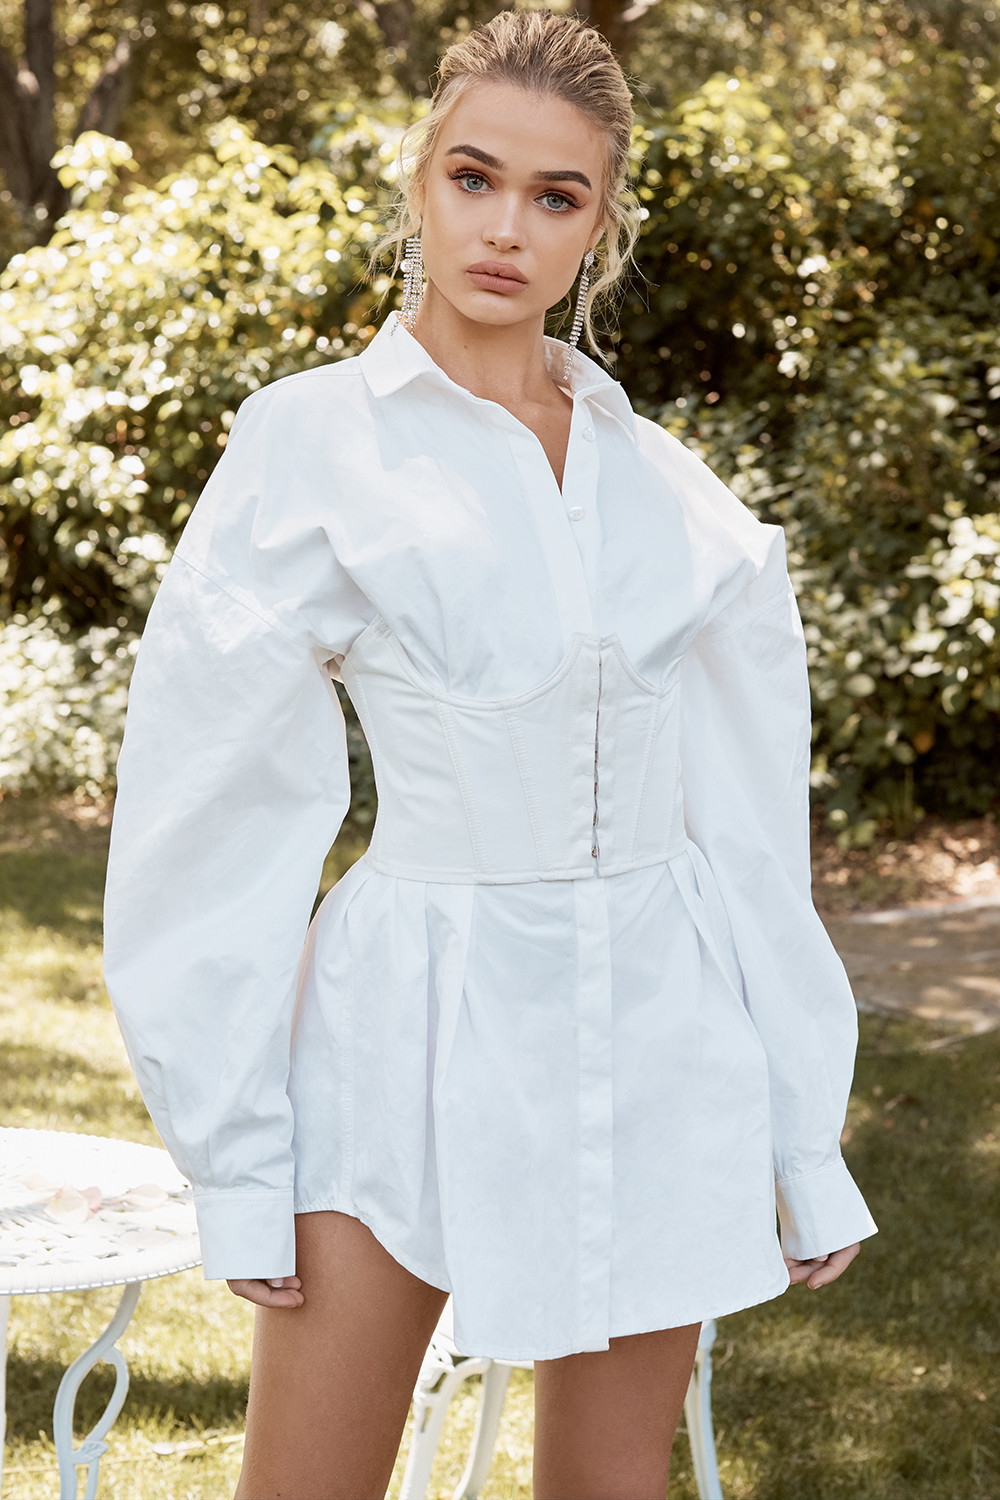 White Corset Dress Outfit Ideas